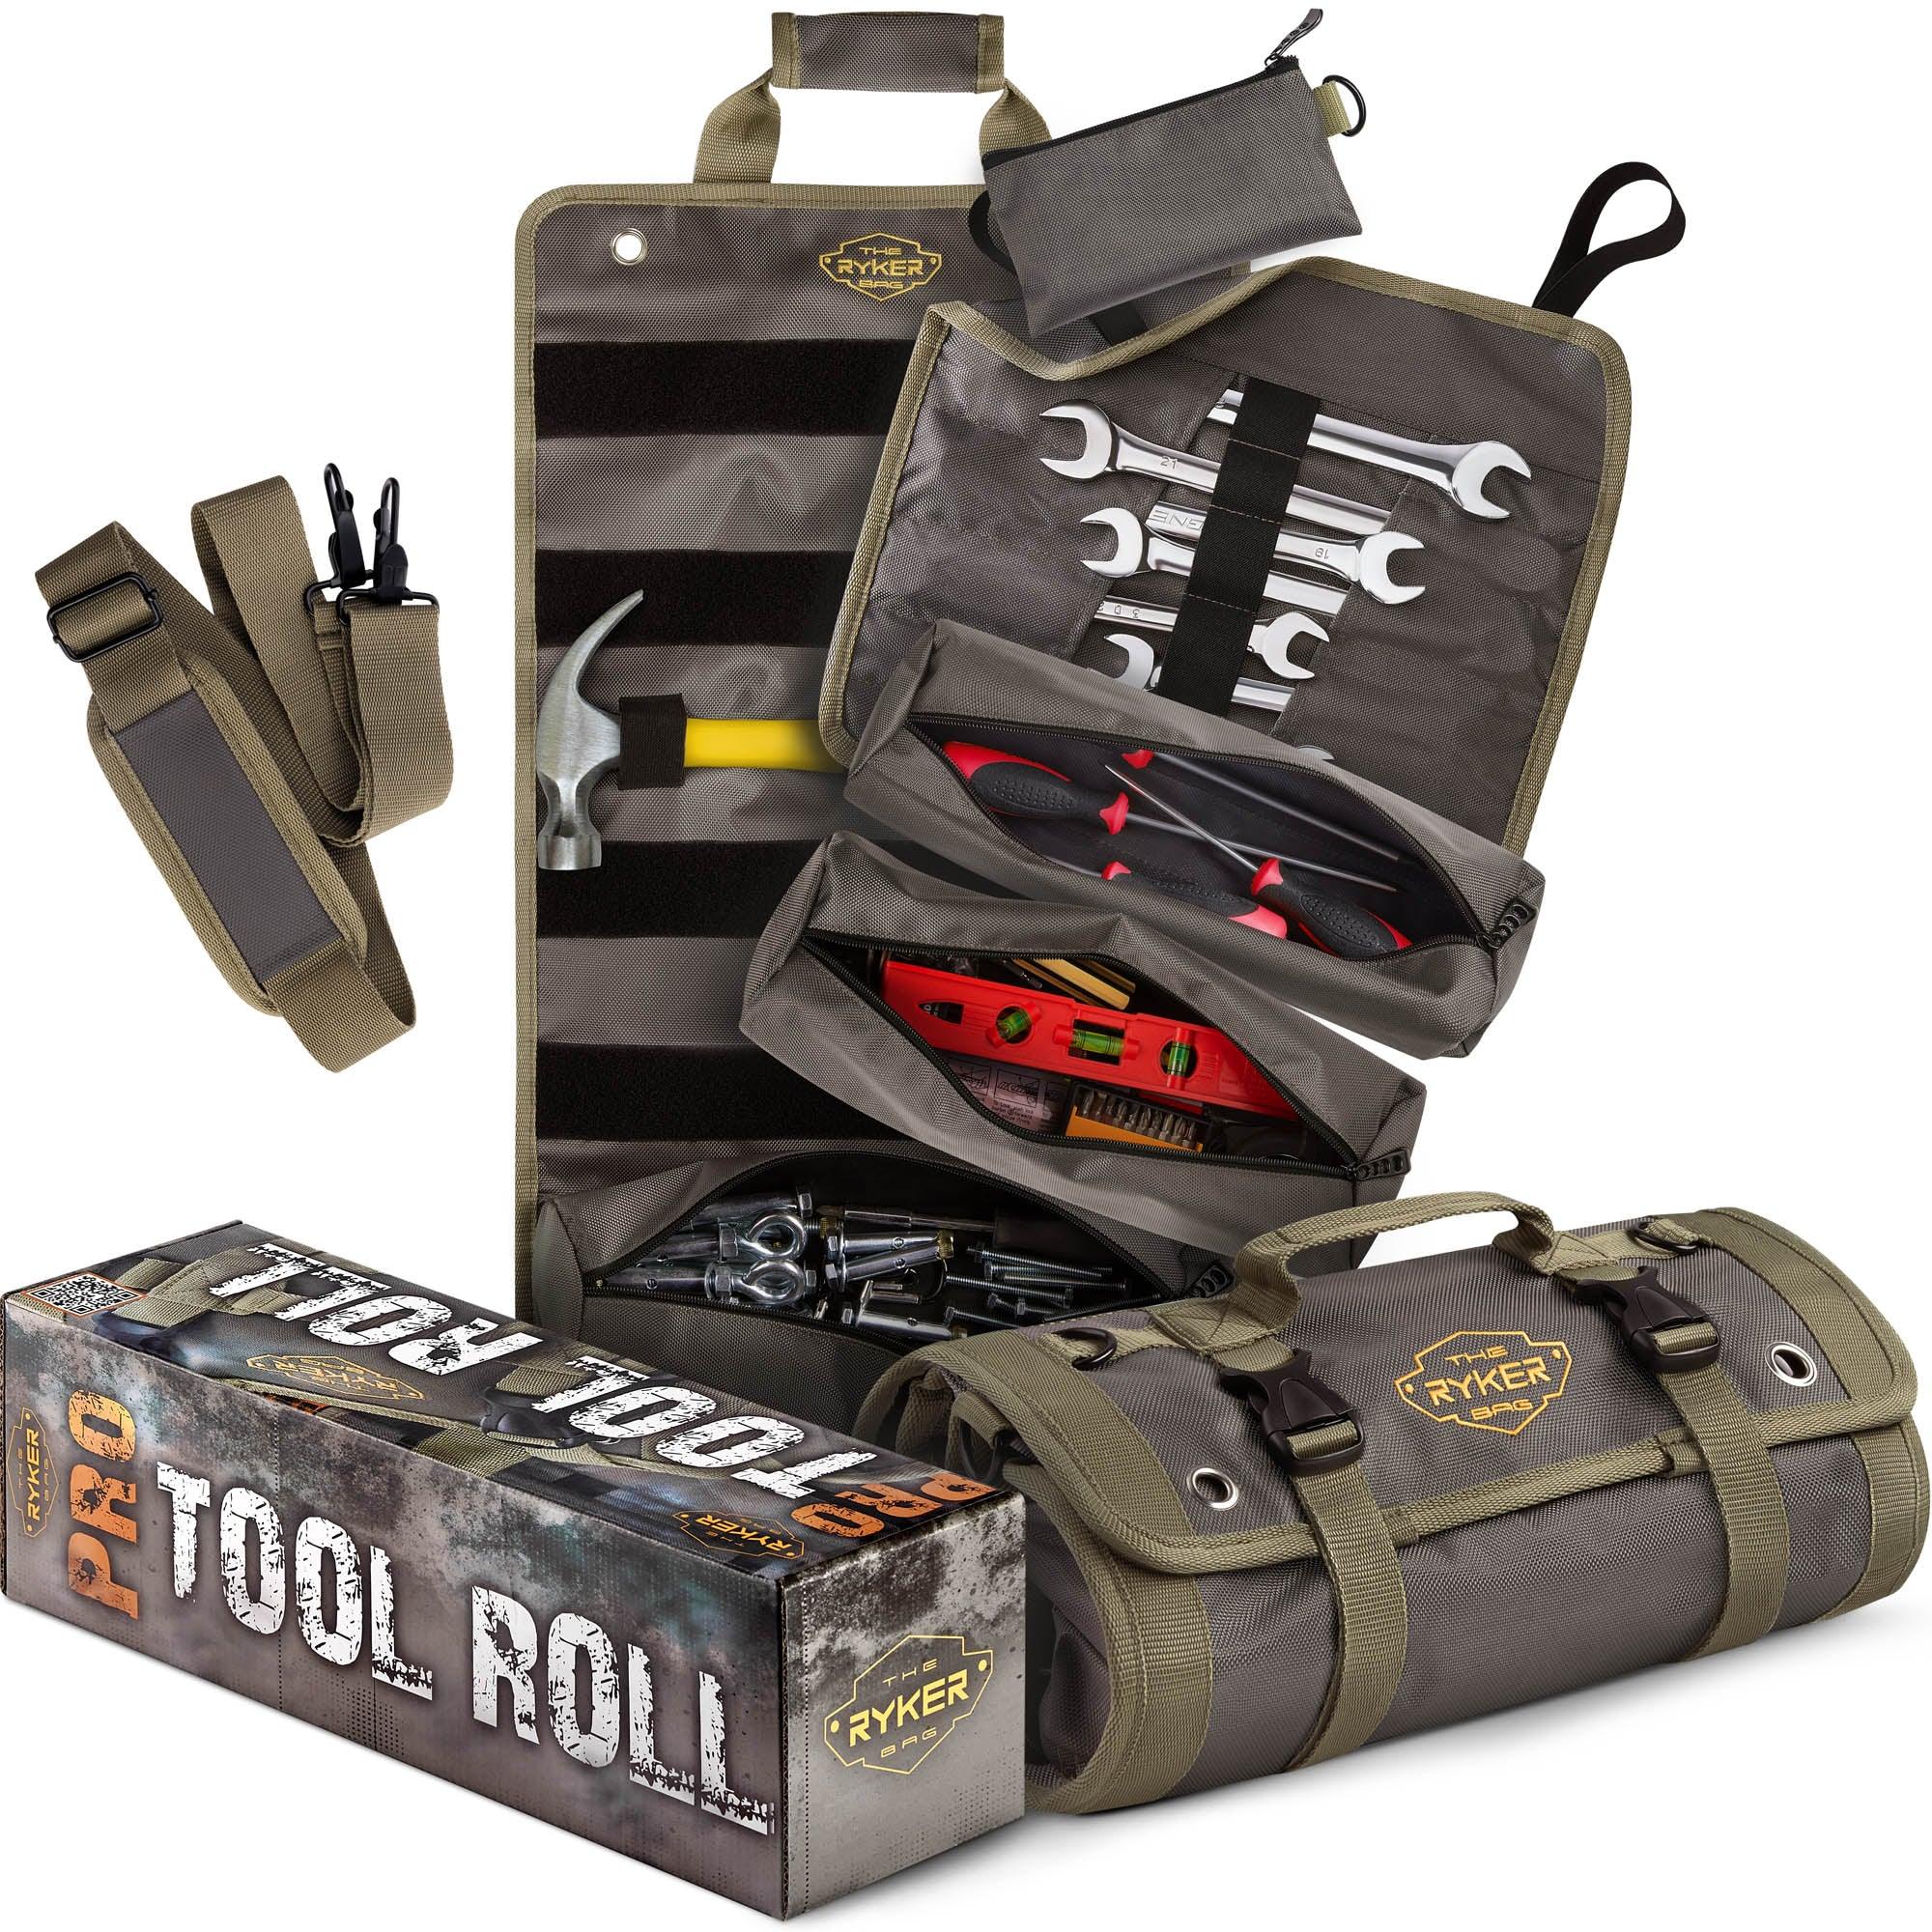 The Ryker Bag | PRO Tool Roll - Ultra Durable Tool Bag